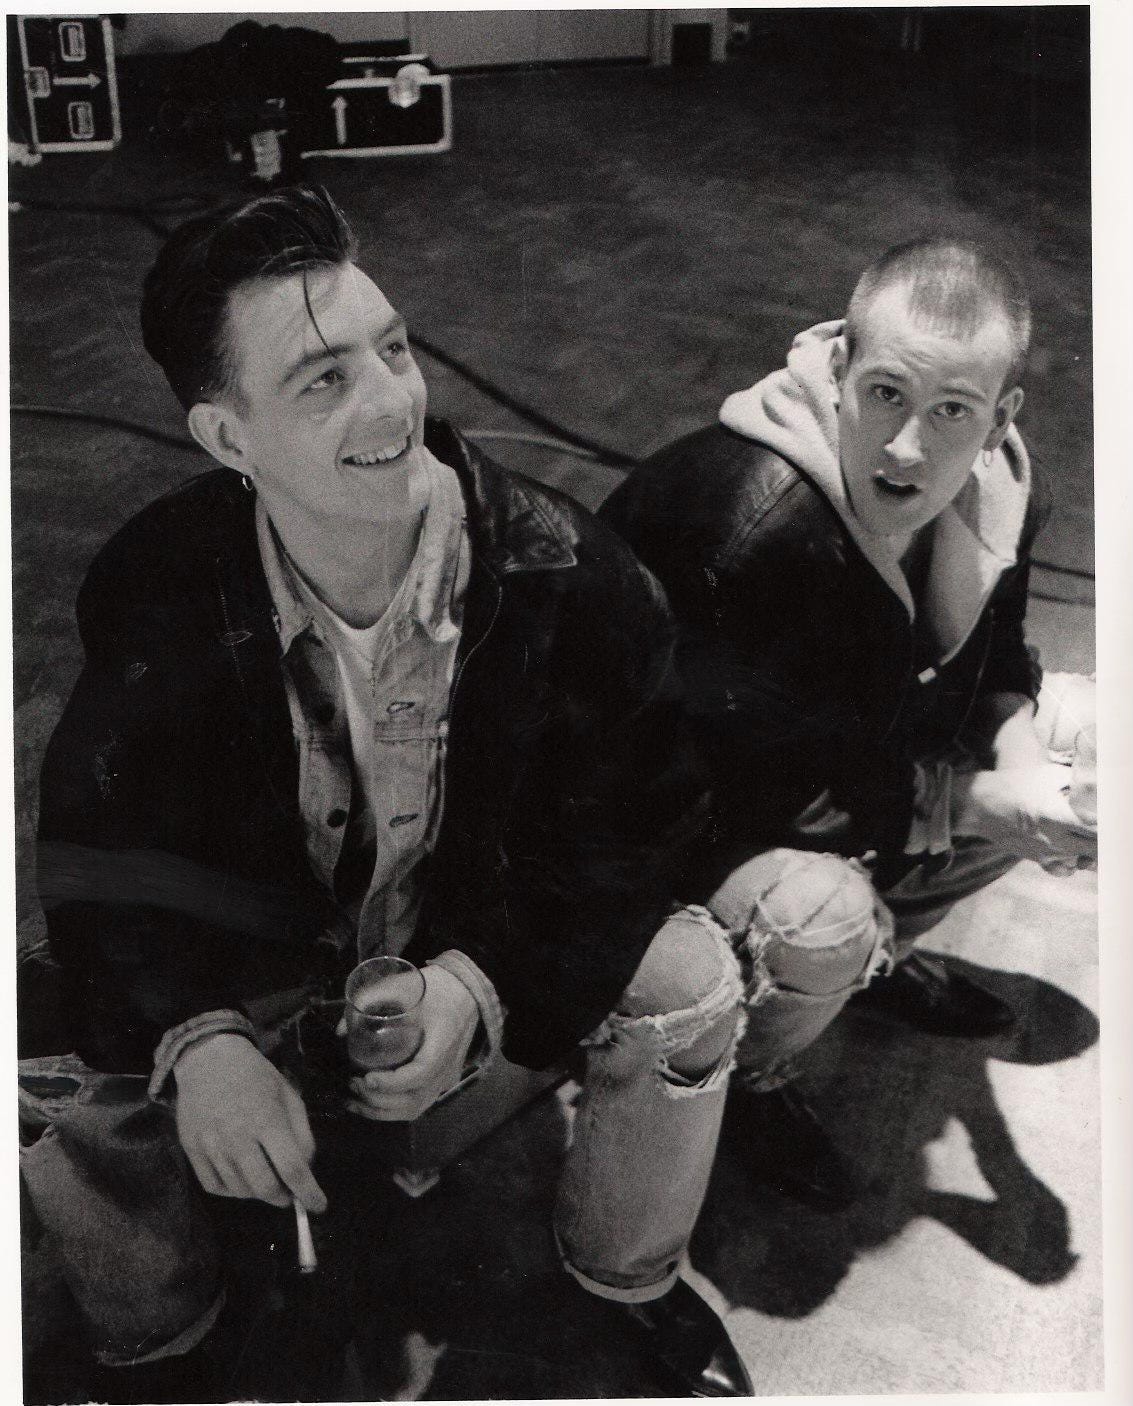 Jaime Petrie & Nic Briscoe, circa 1985